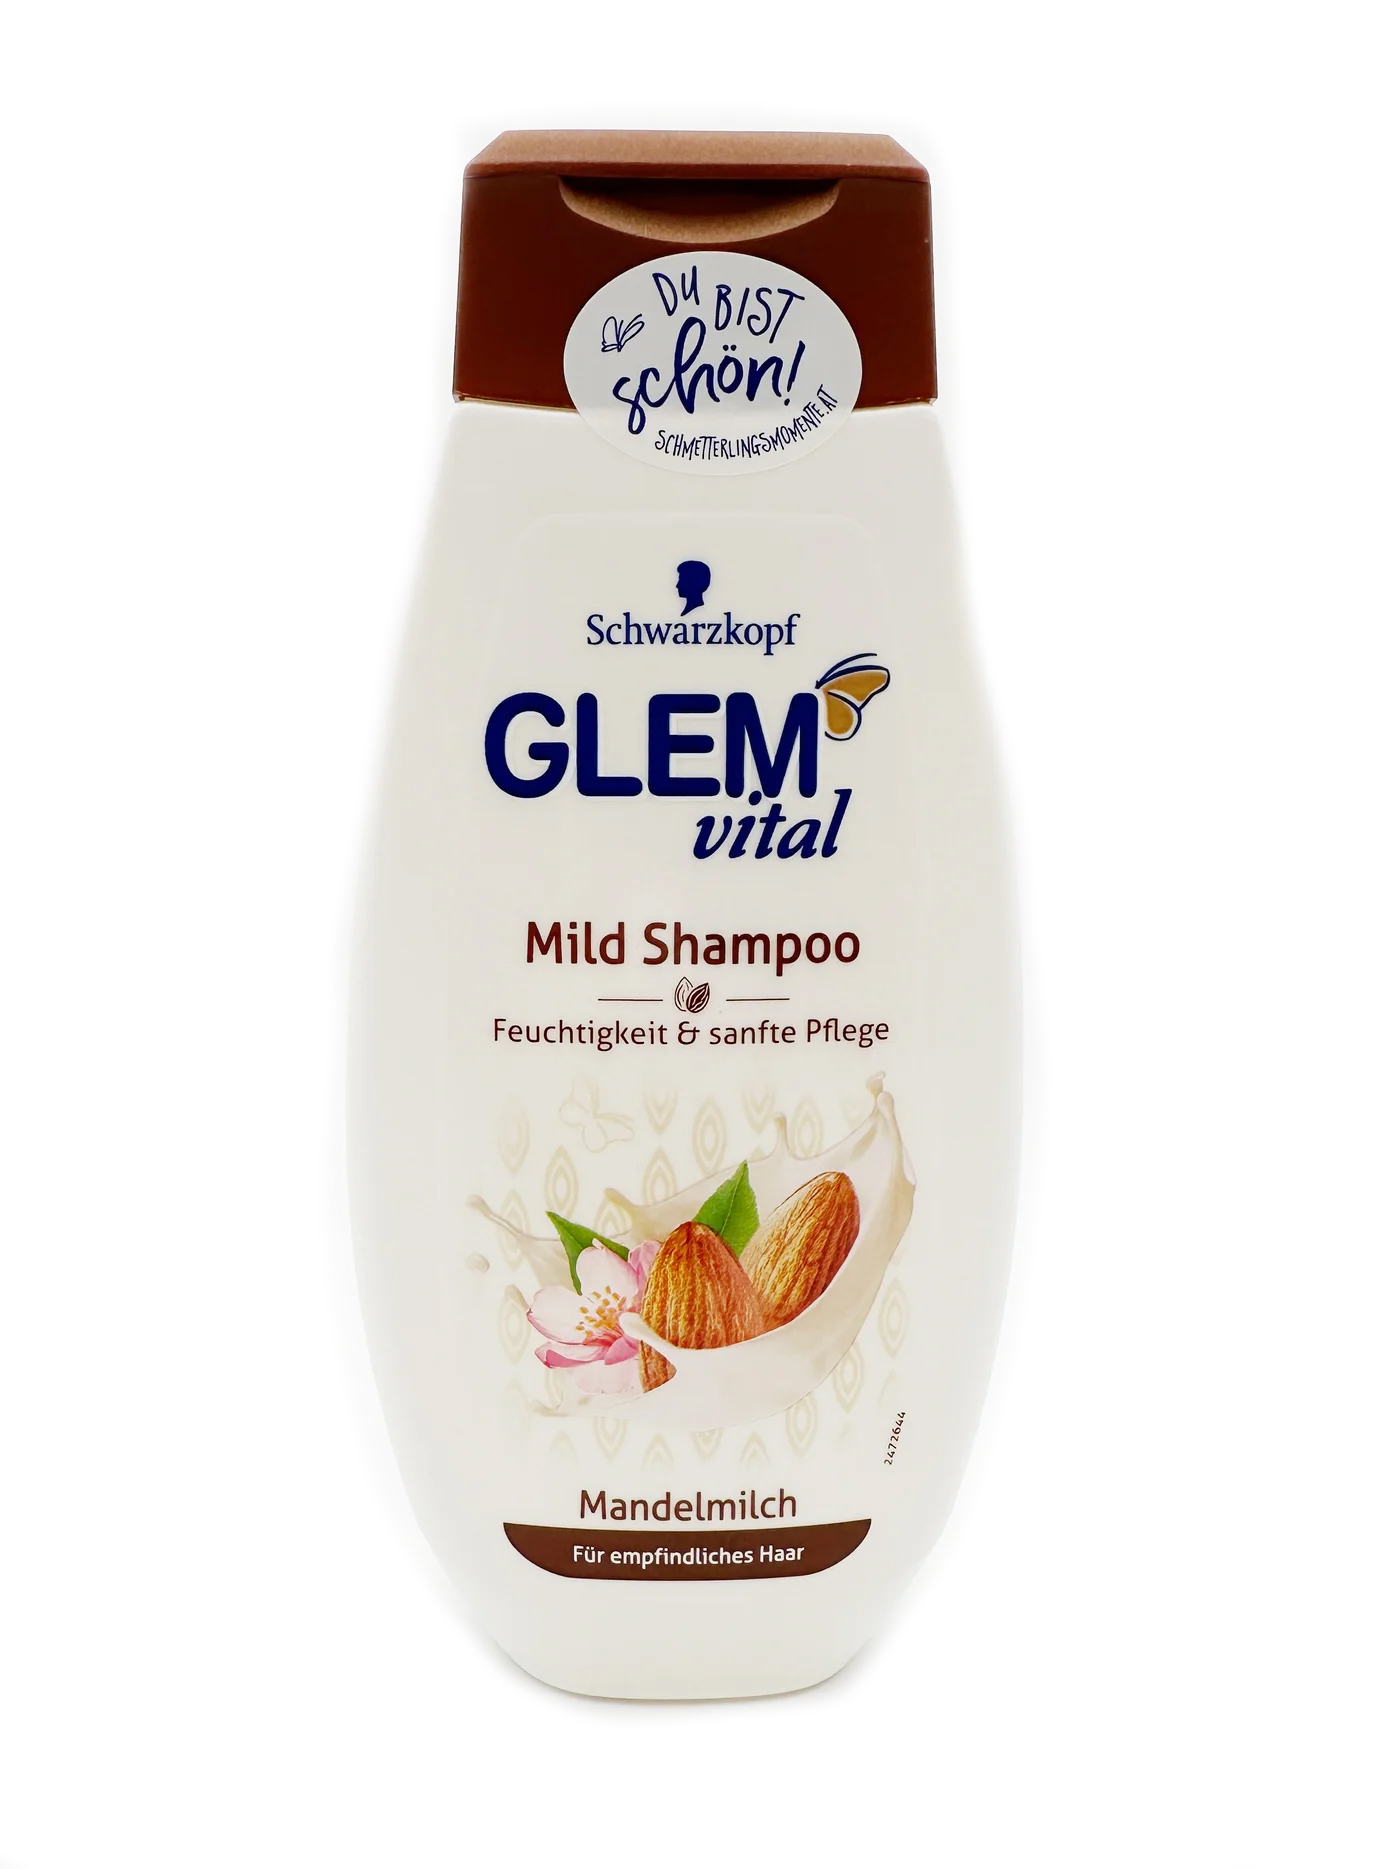 Glem Vital Mandelmilch Shampoo Mild 350ml